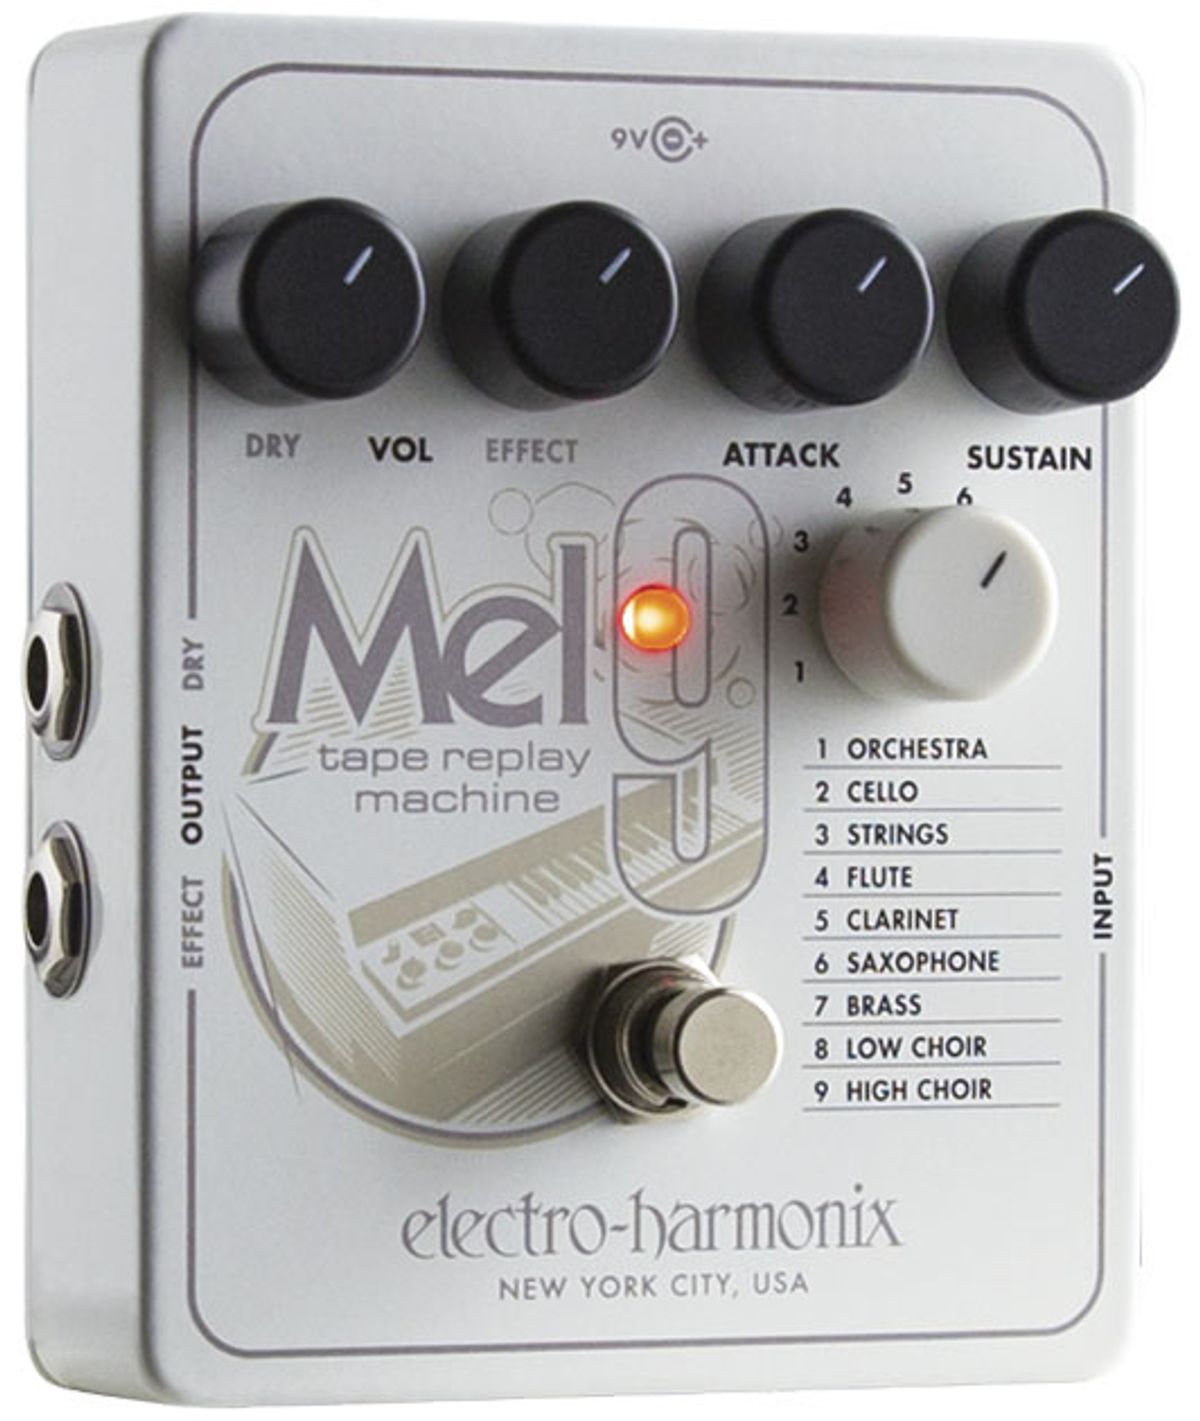 Electro-Harmonix Mel9 Review